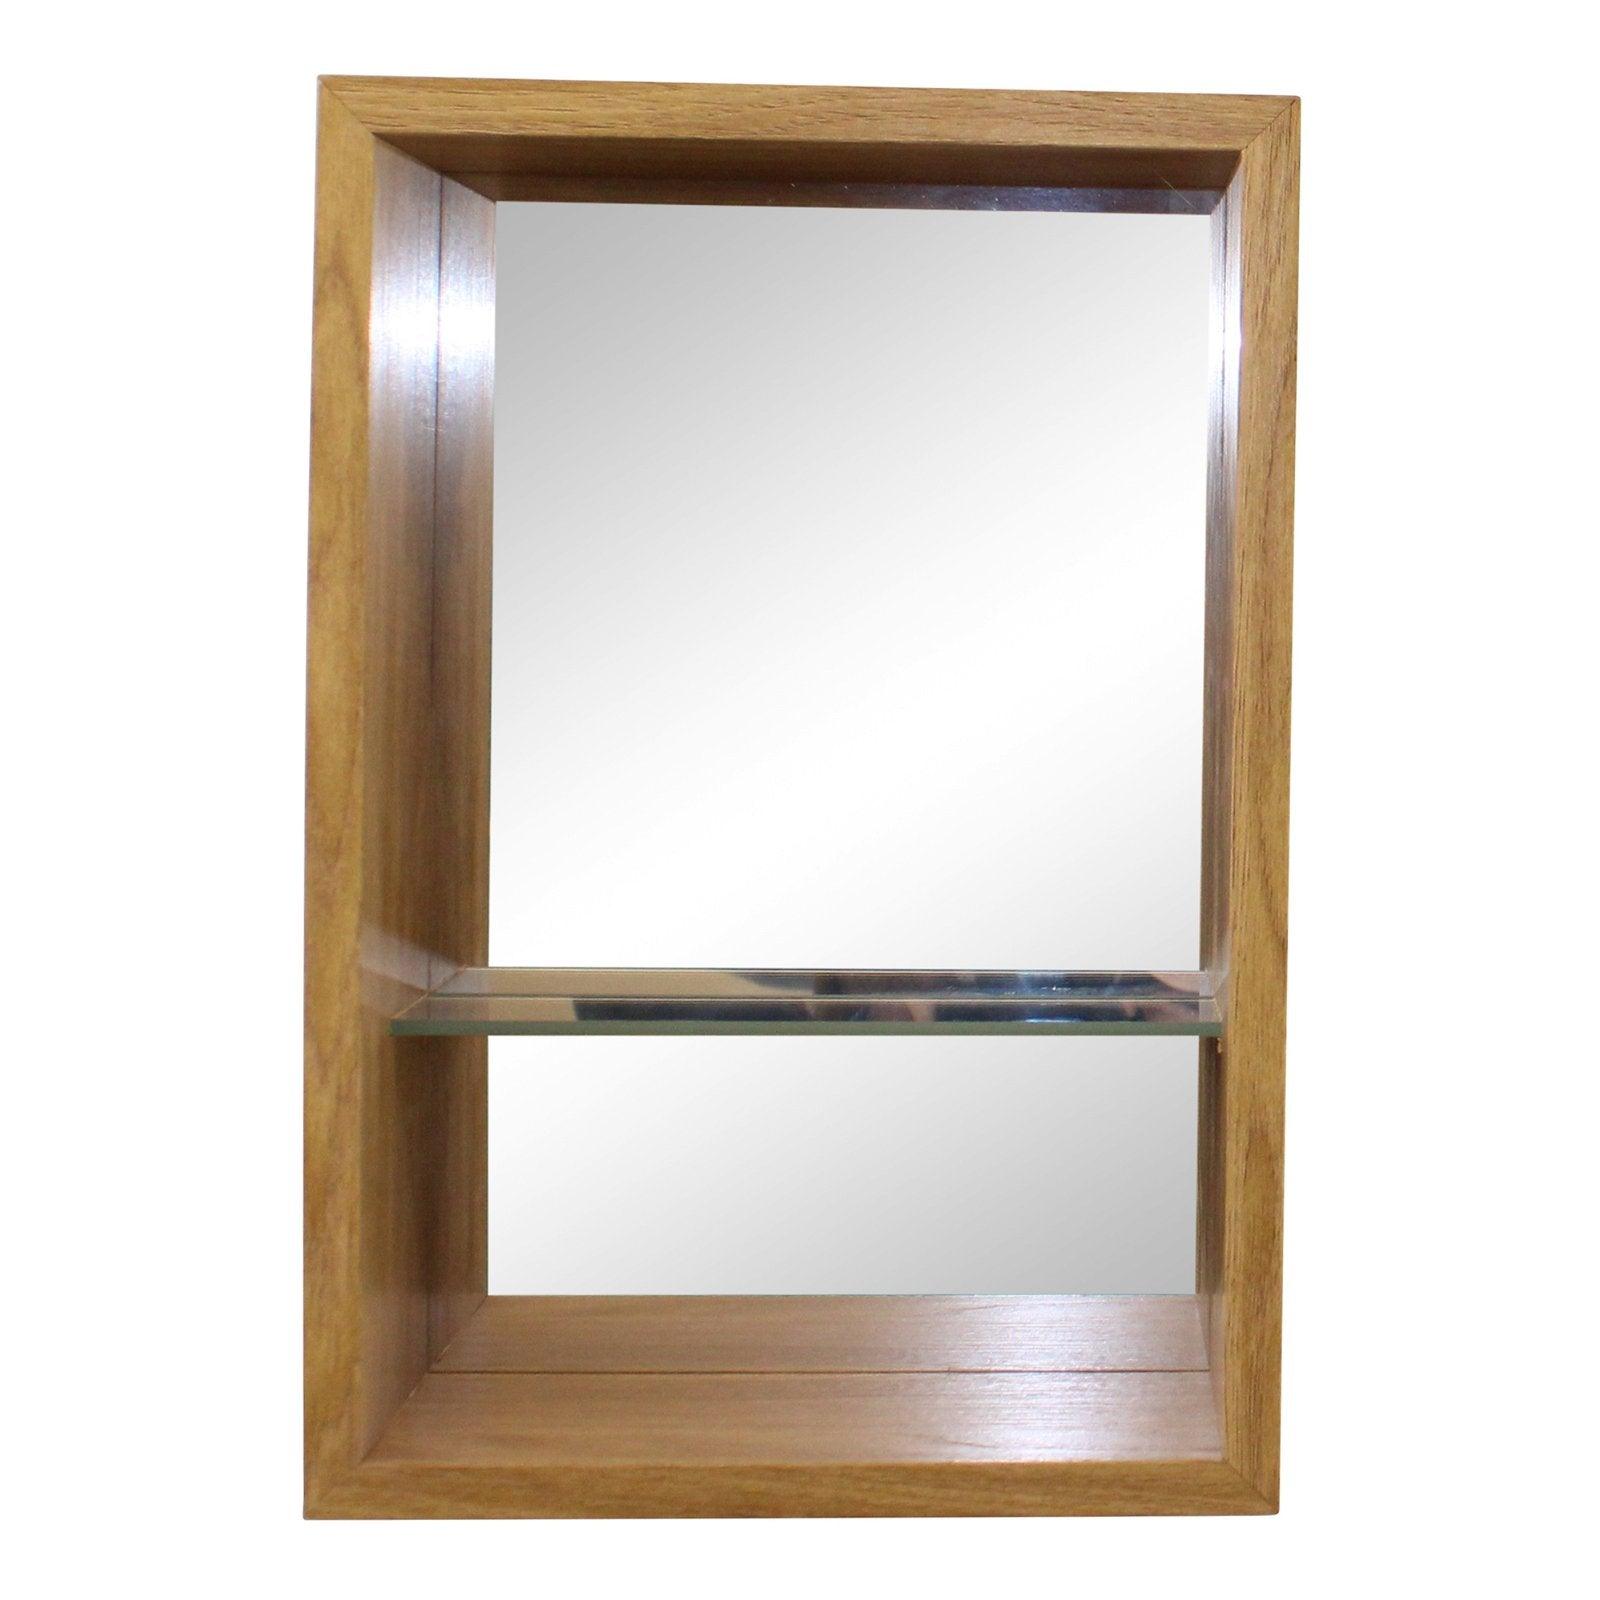 Small Veneered Mirror Shelf Unit, 31x21cm-Wall Hanging Shelving